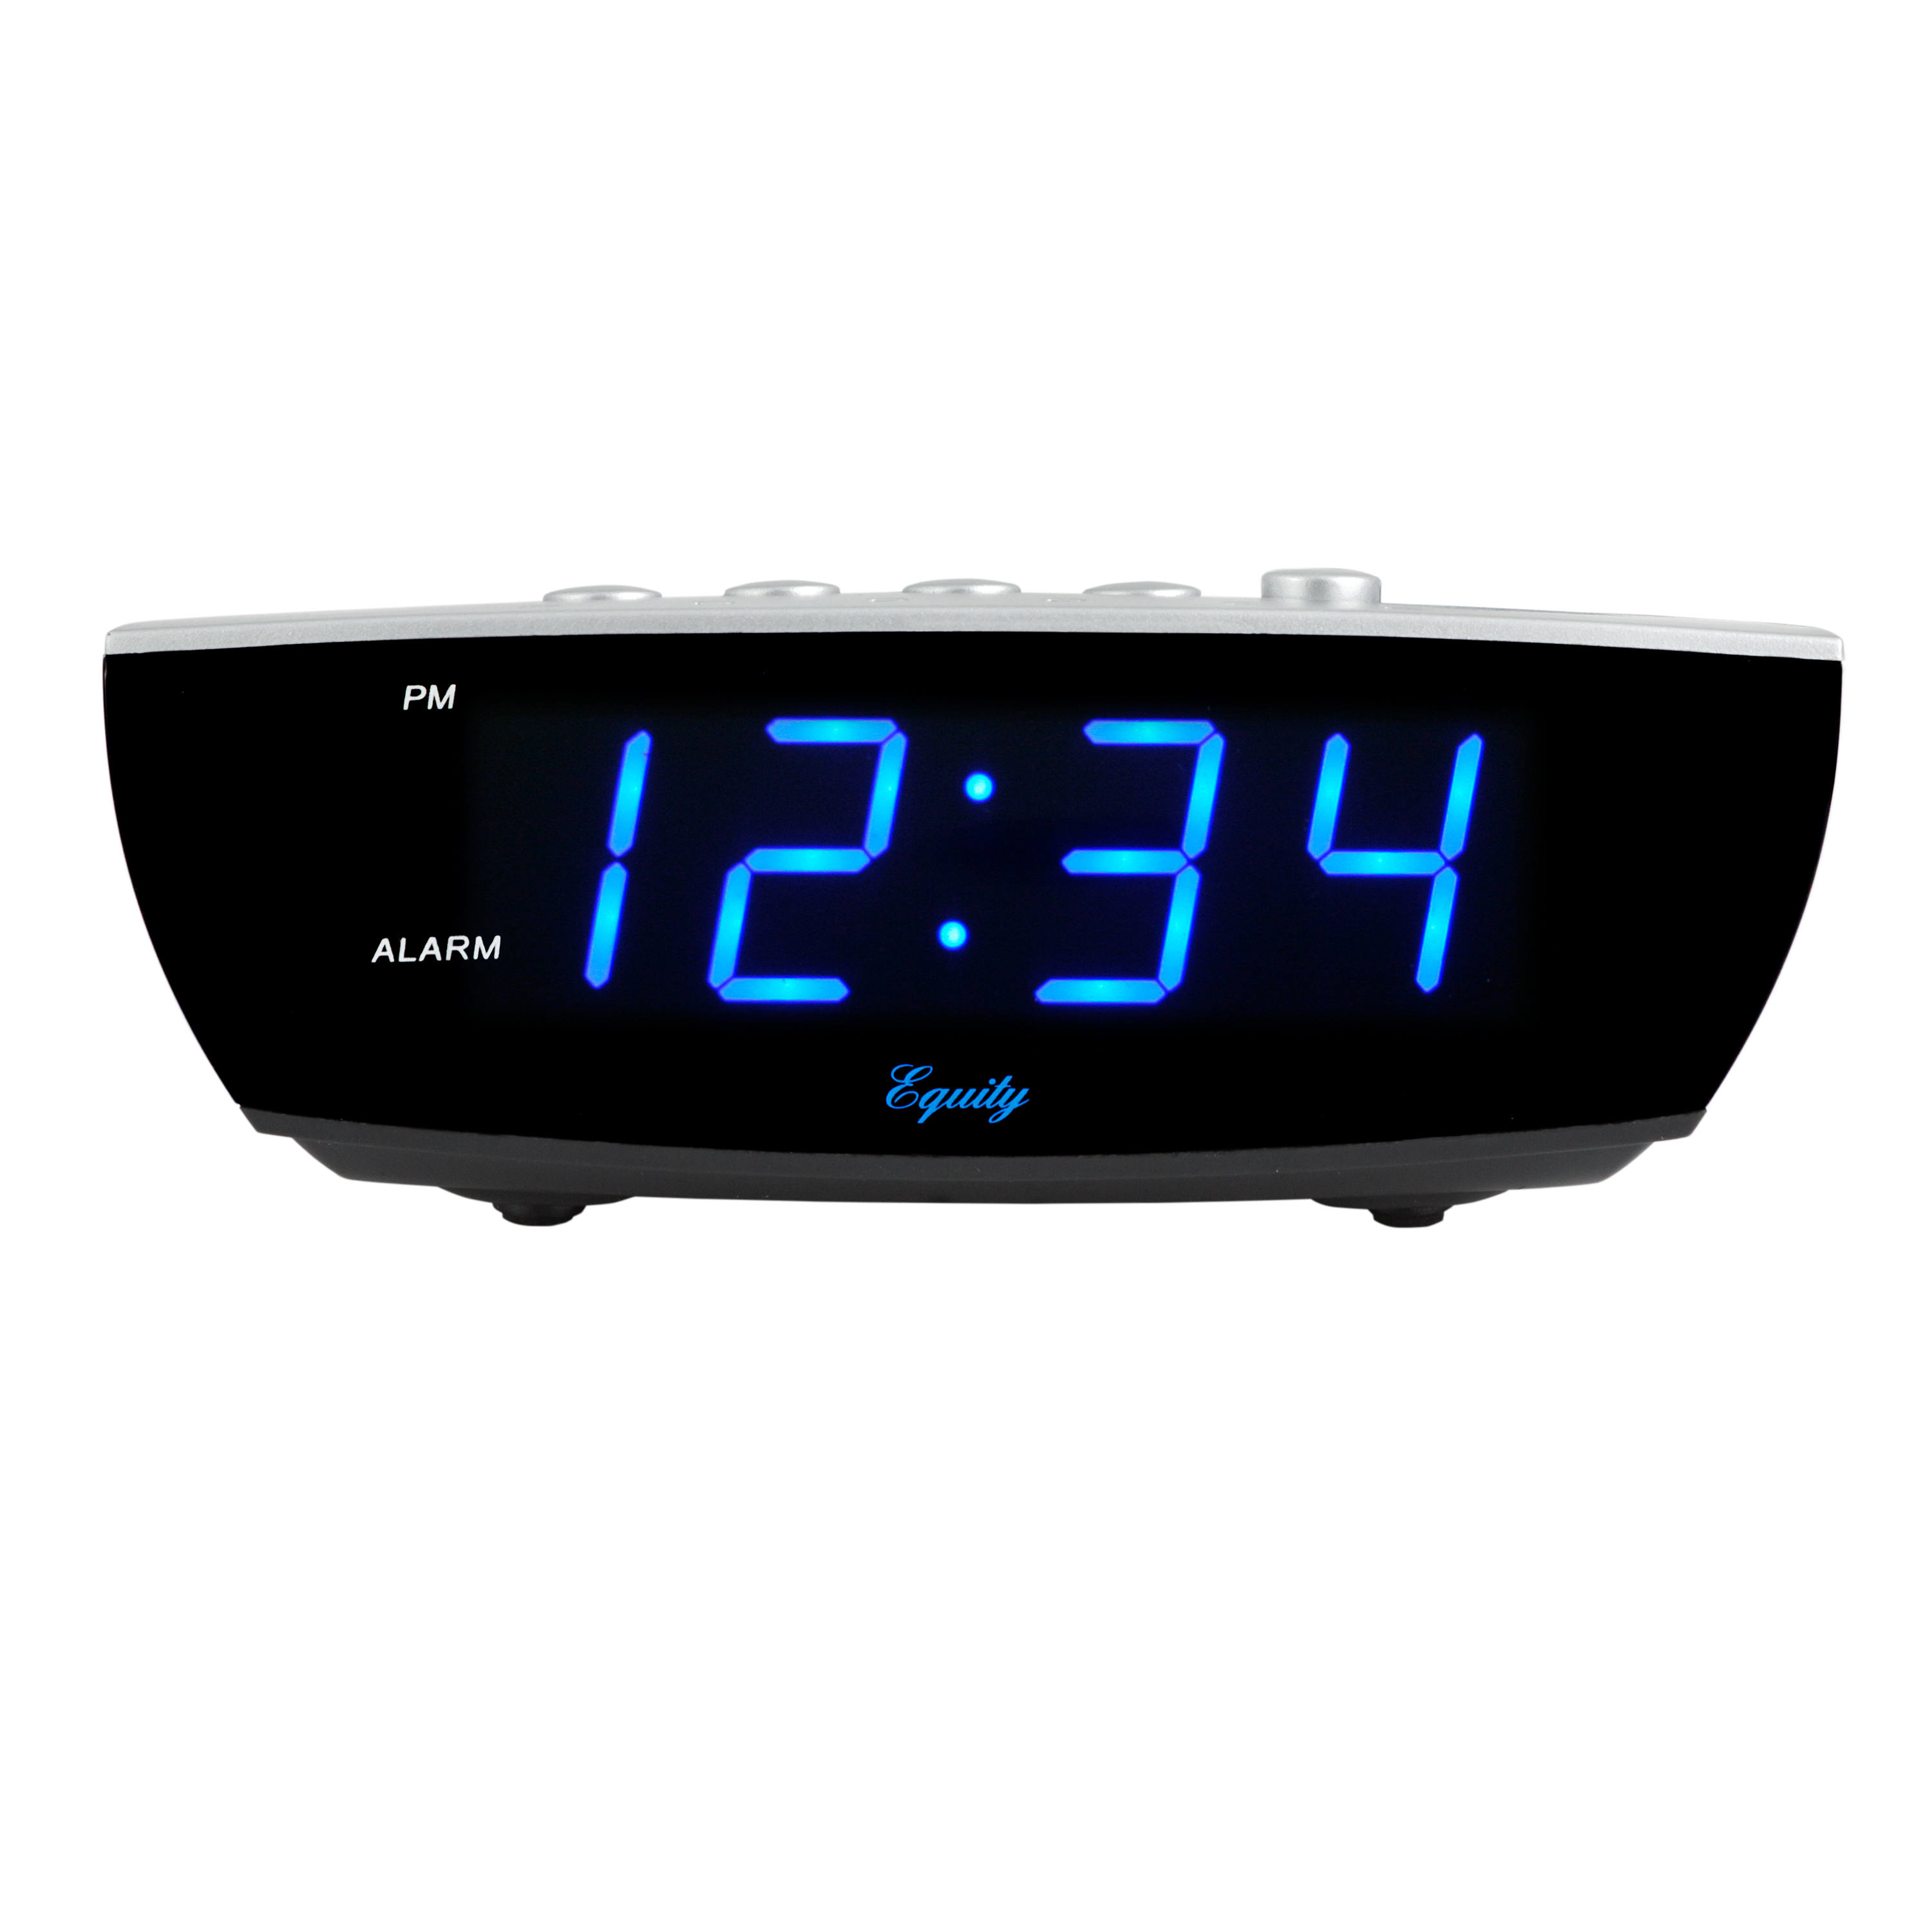 Equity by La Crosse 75903 0.9" Blue LED Digital Desktop Alarm Clock - image 1 of 5